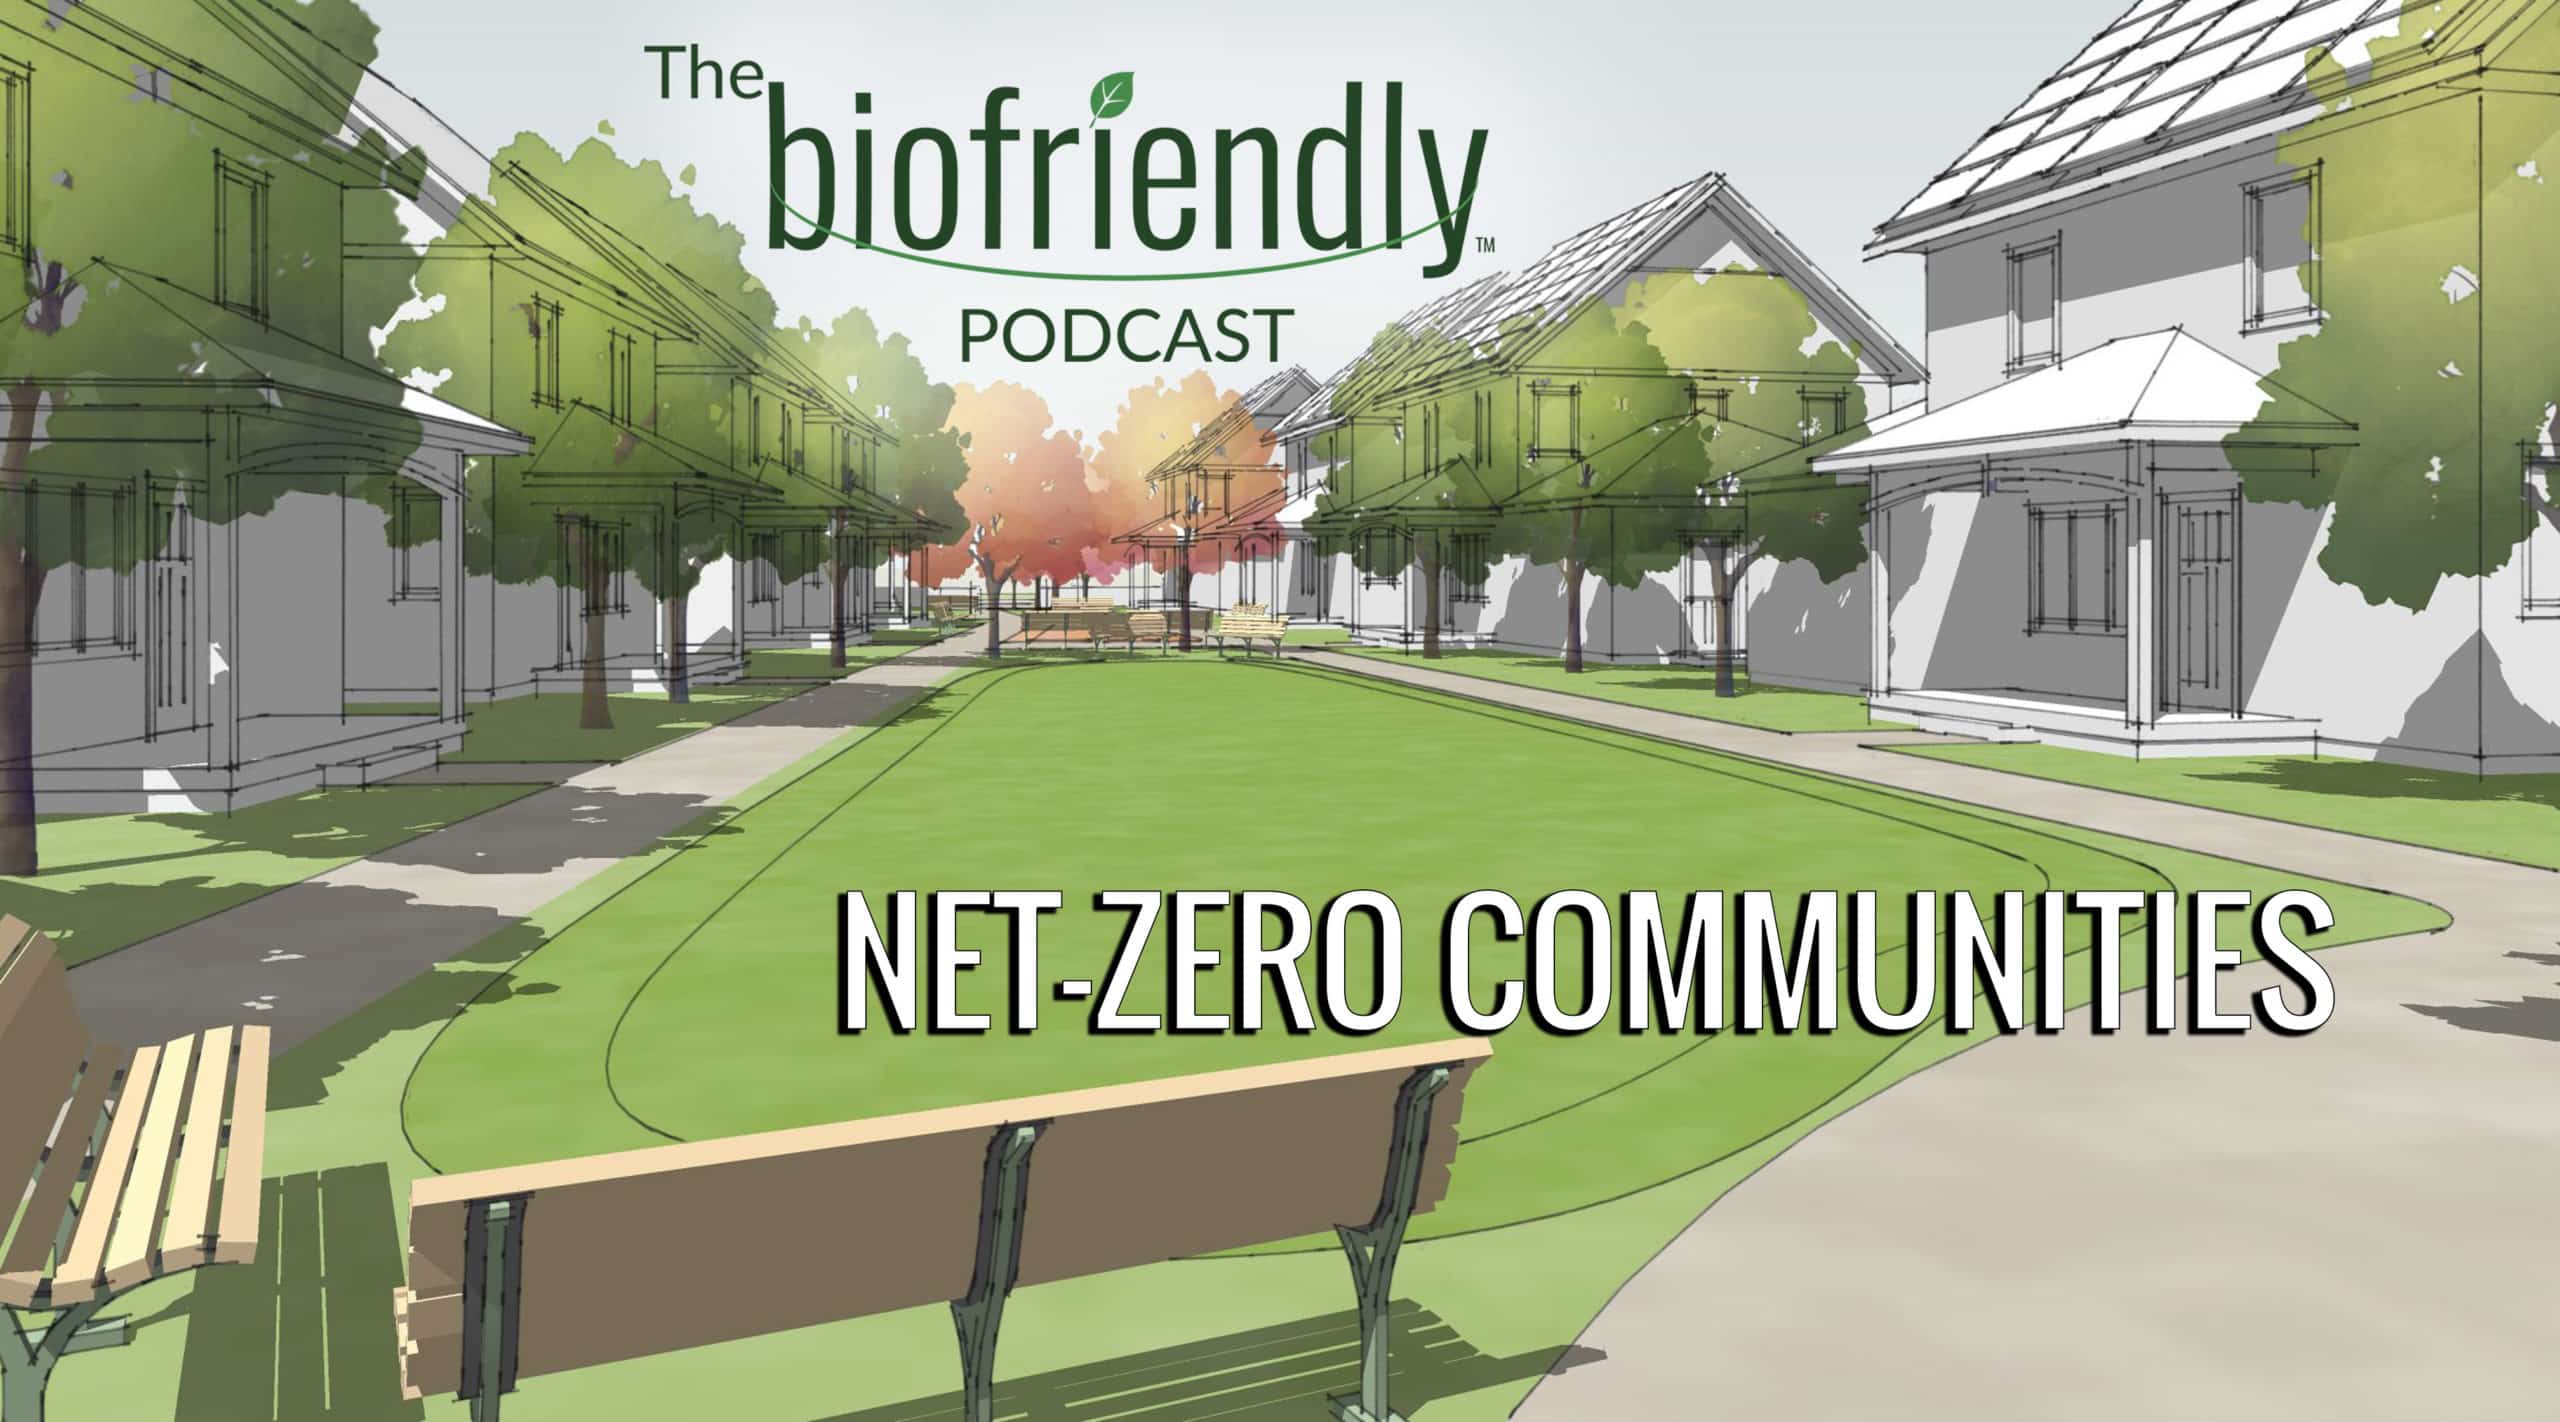 The Biofriendly Podcast - Episode 48 - Net-Zero Communities